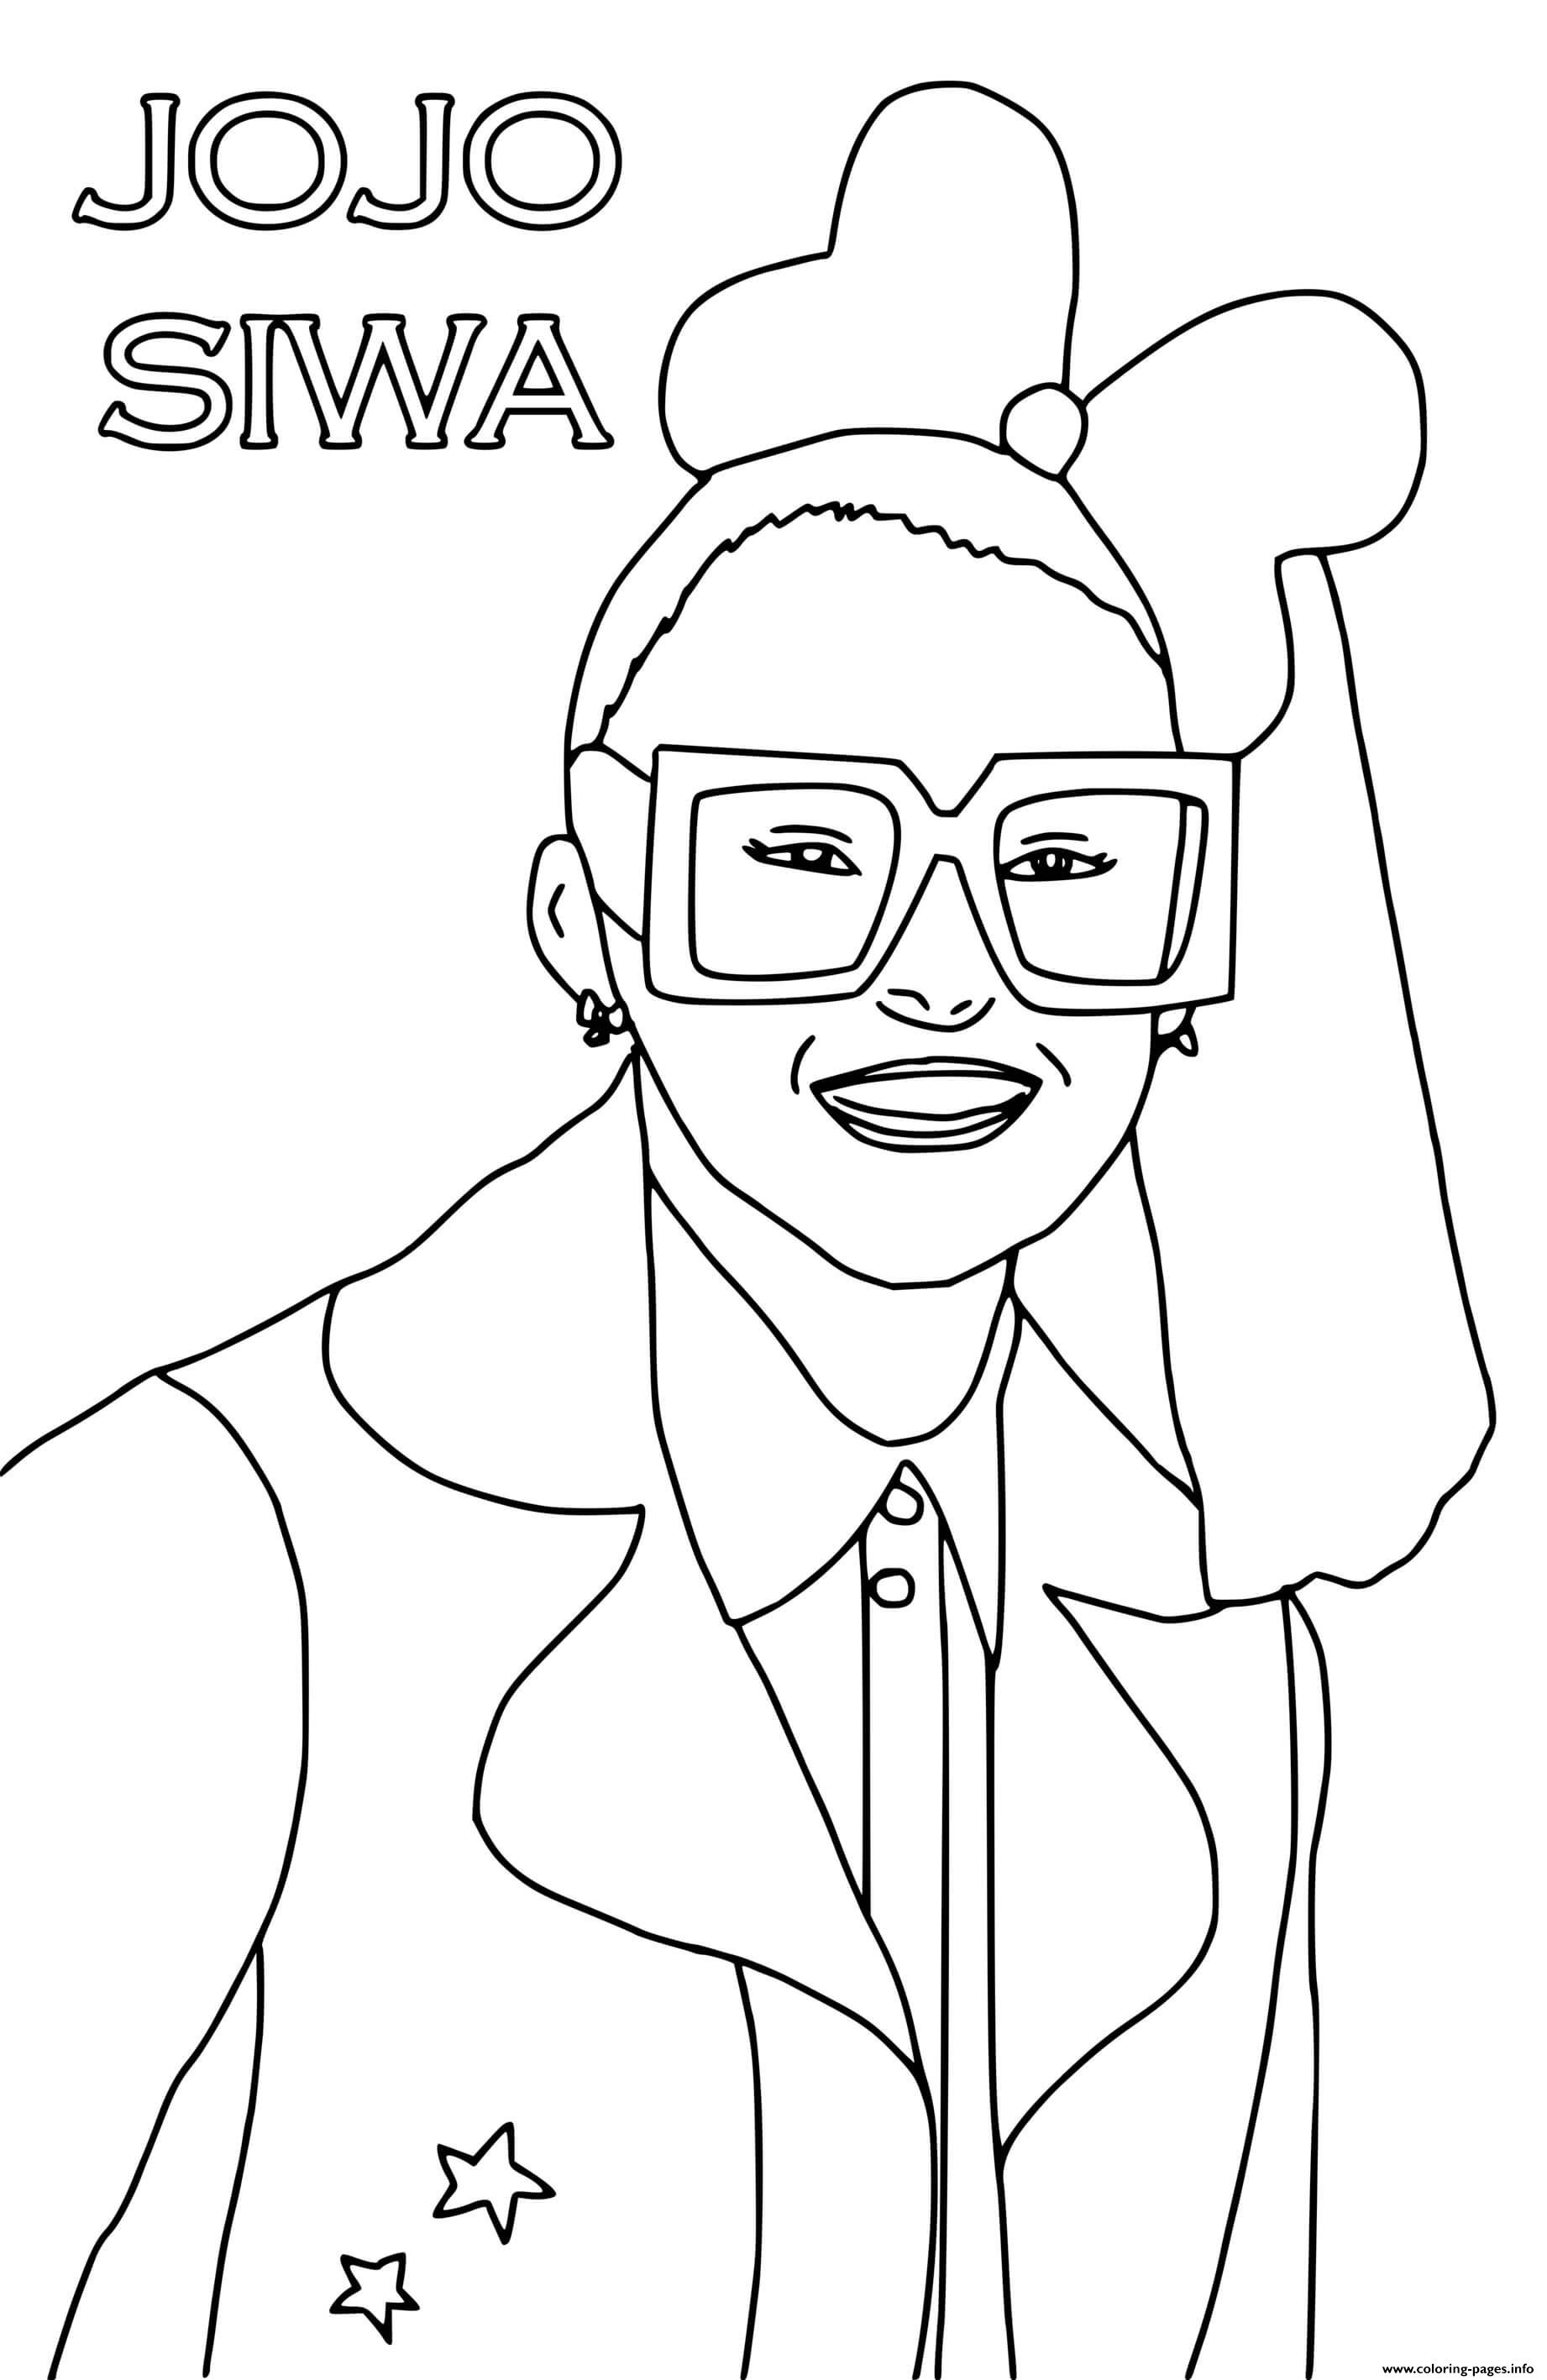 Jojo Siwa With Glasses coloring